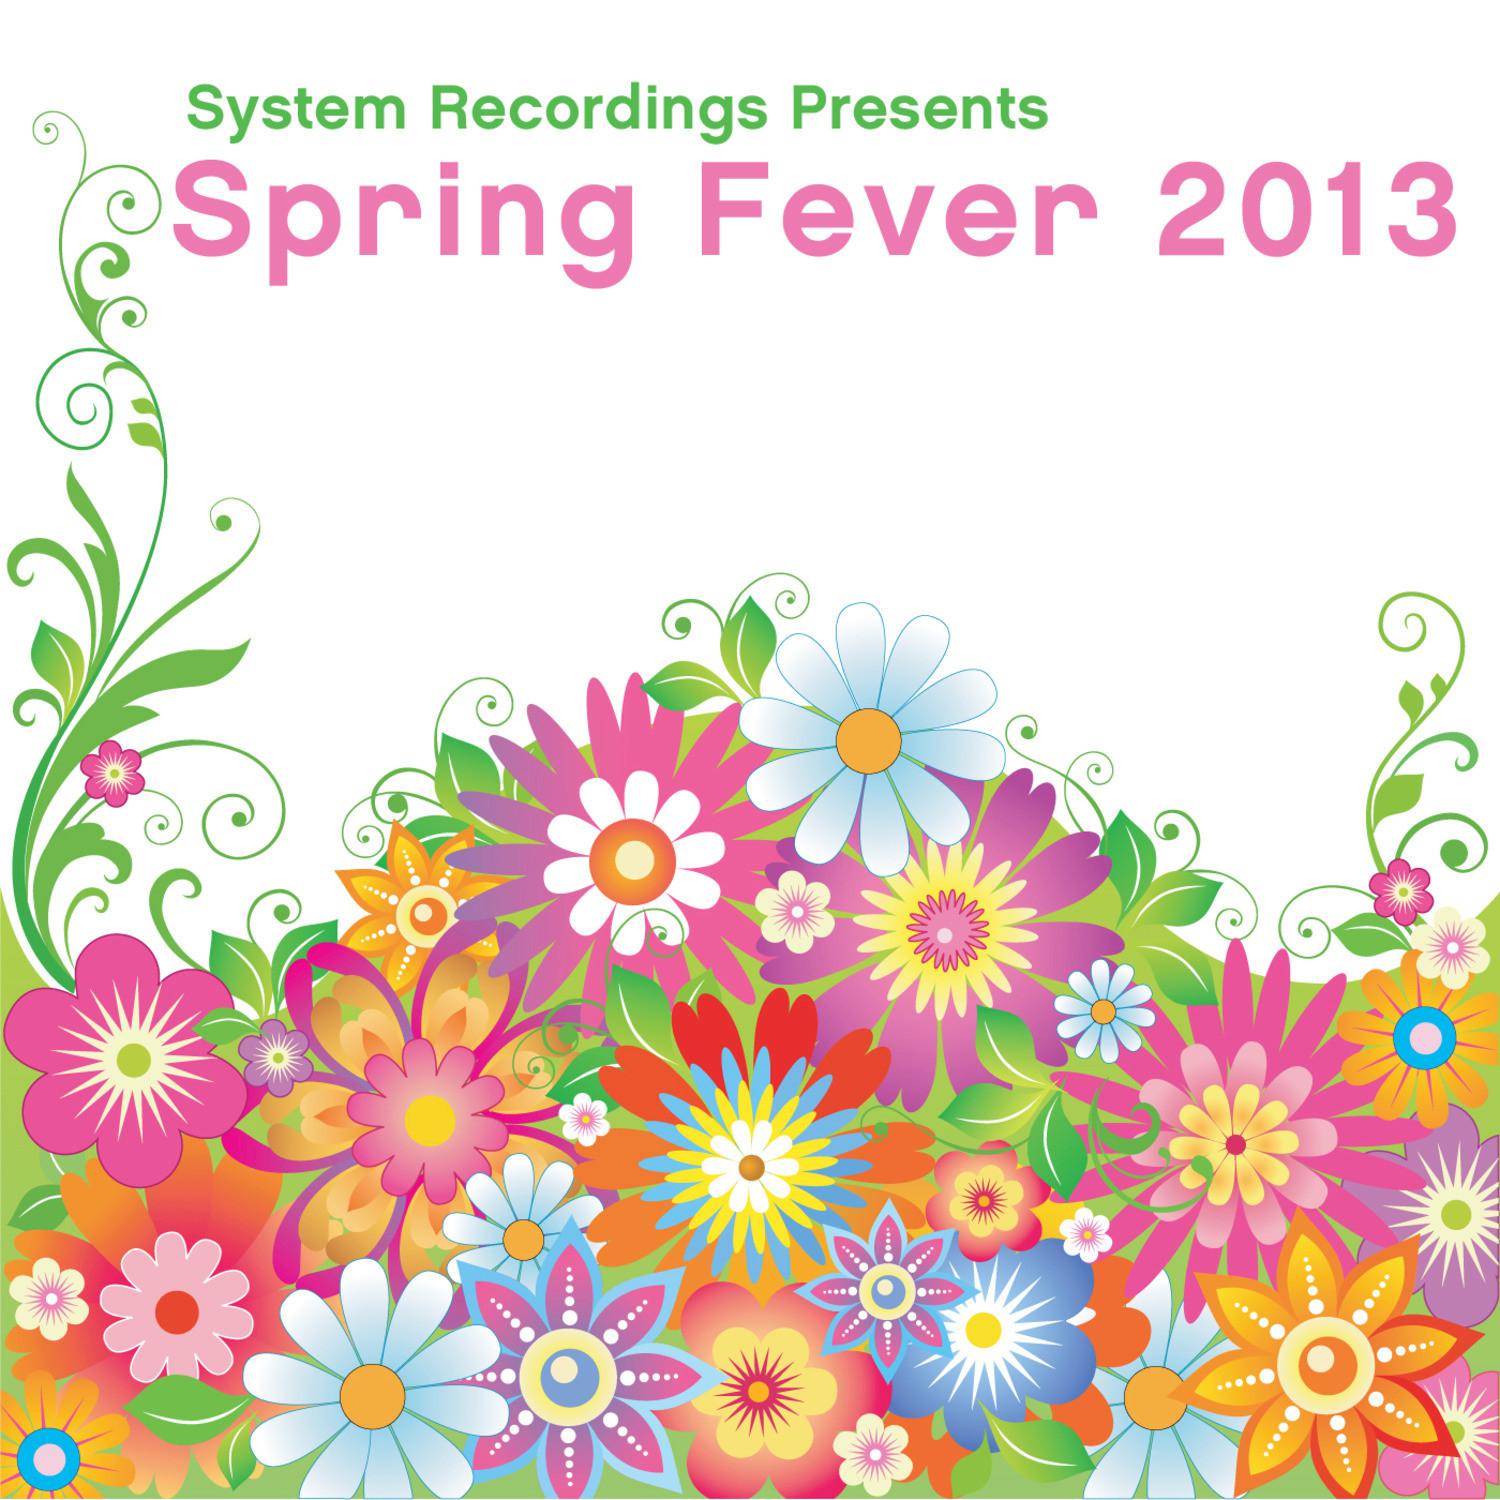 Spring Fever 2013